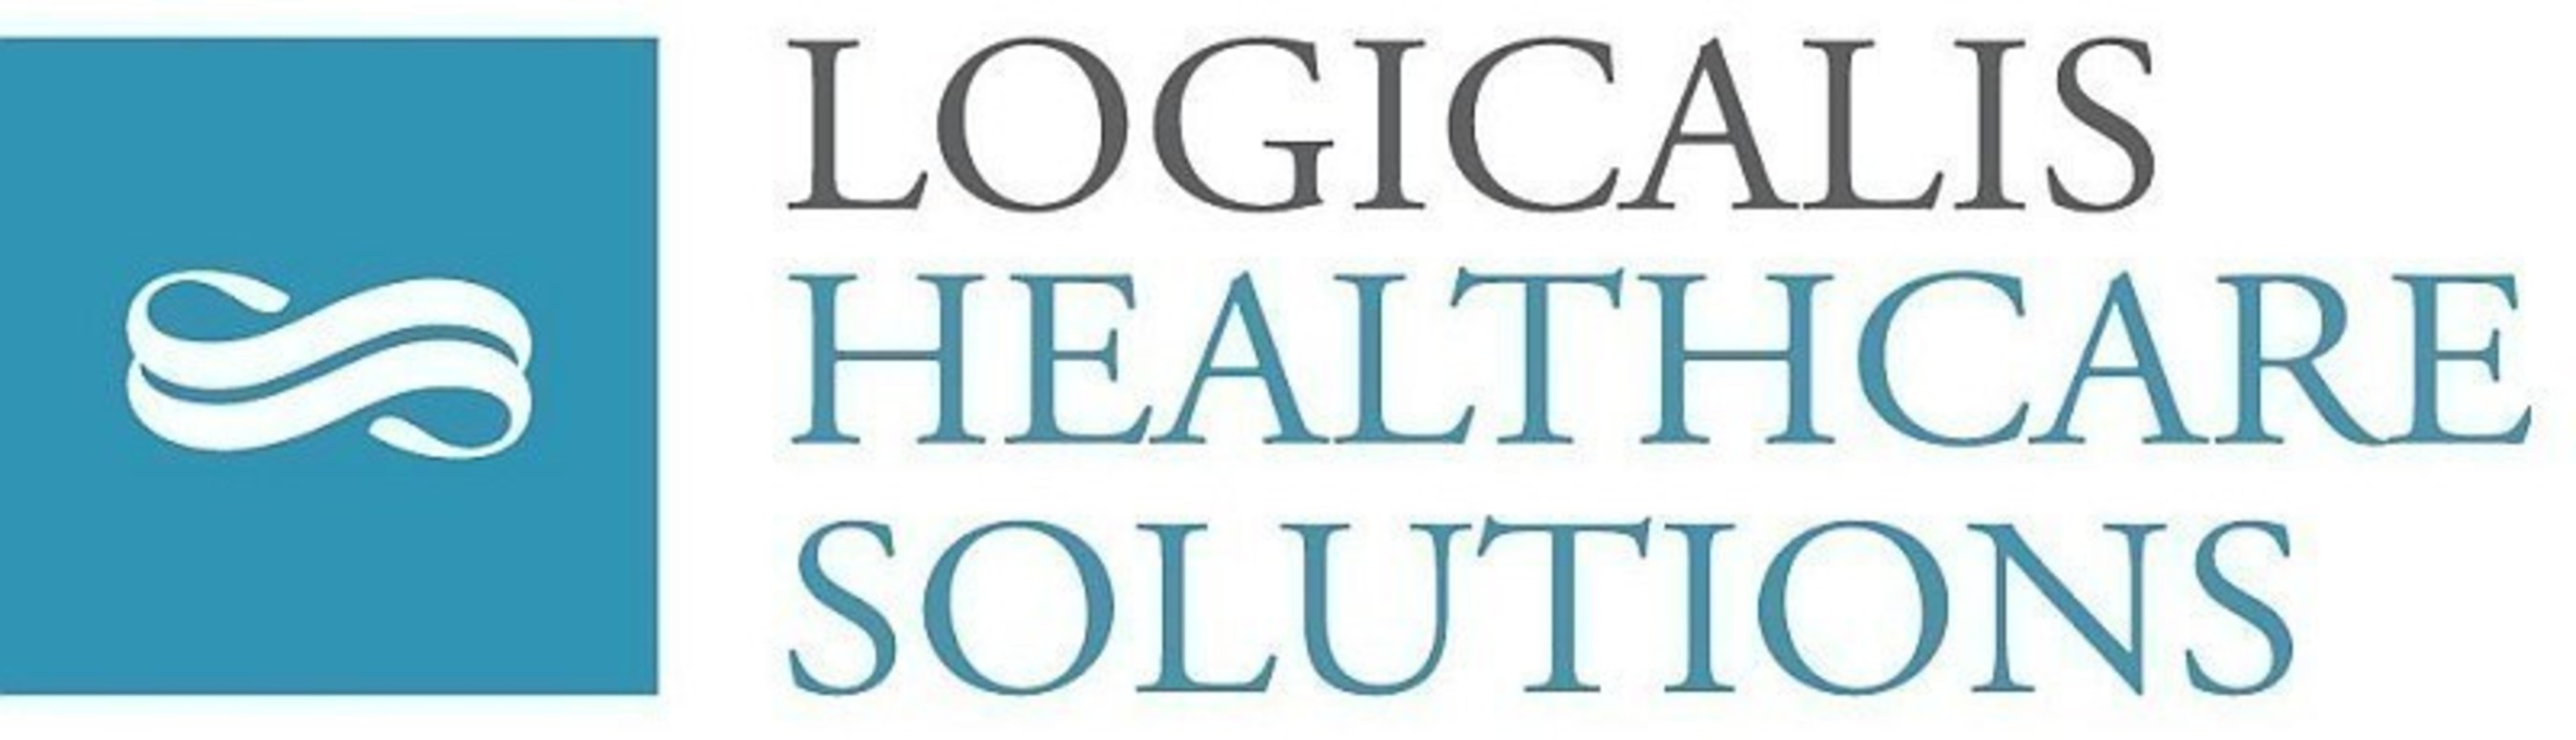 Logicalis Healthcare Solutions (PRNewsFoto/Logicalis)